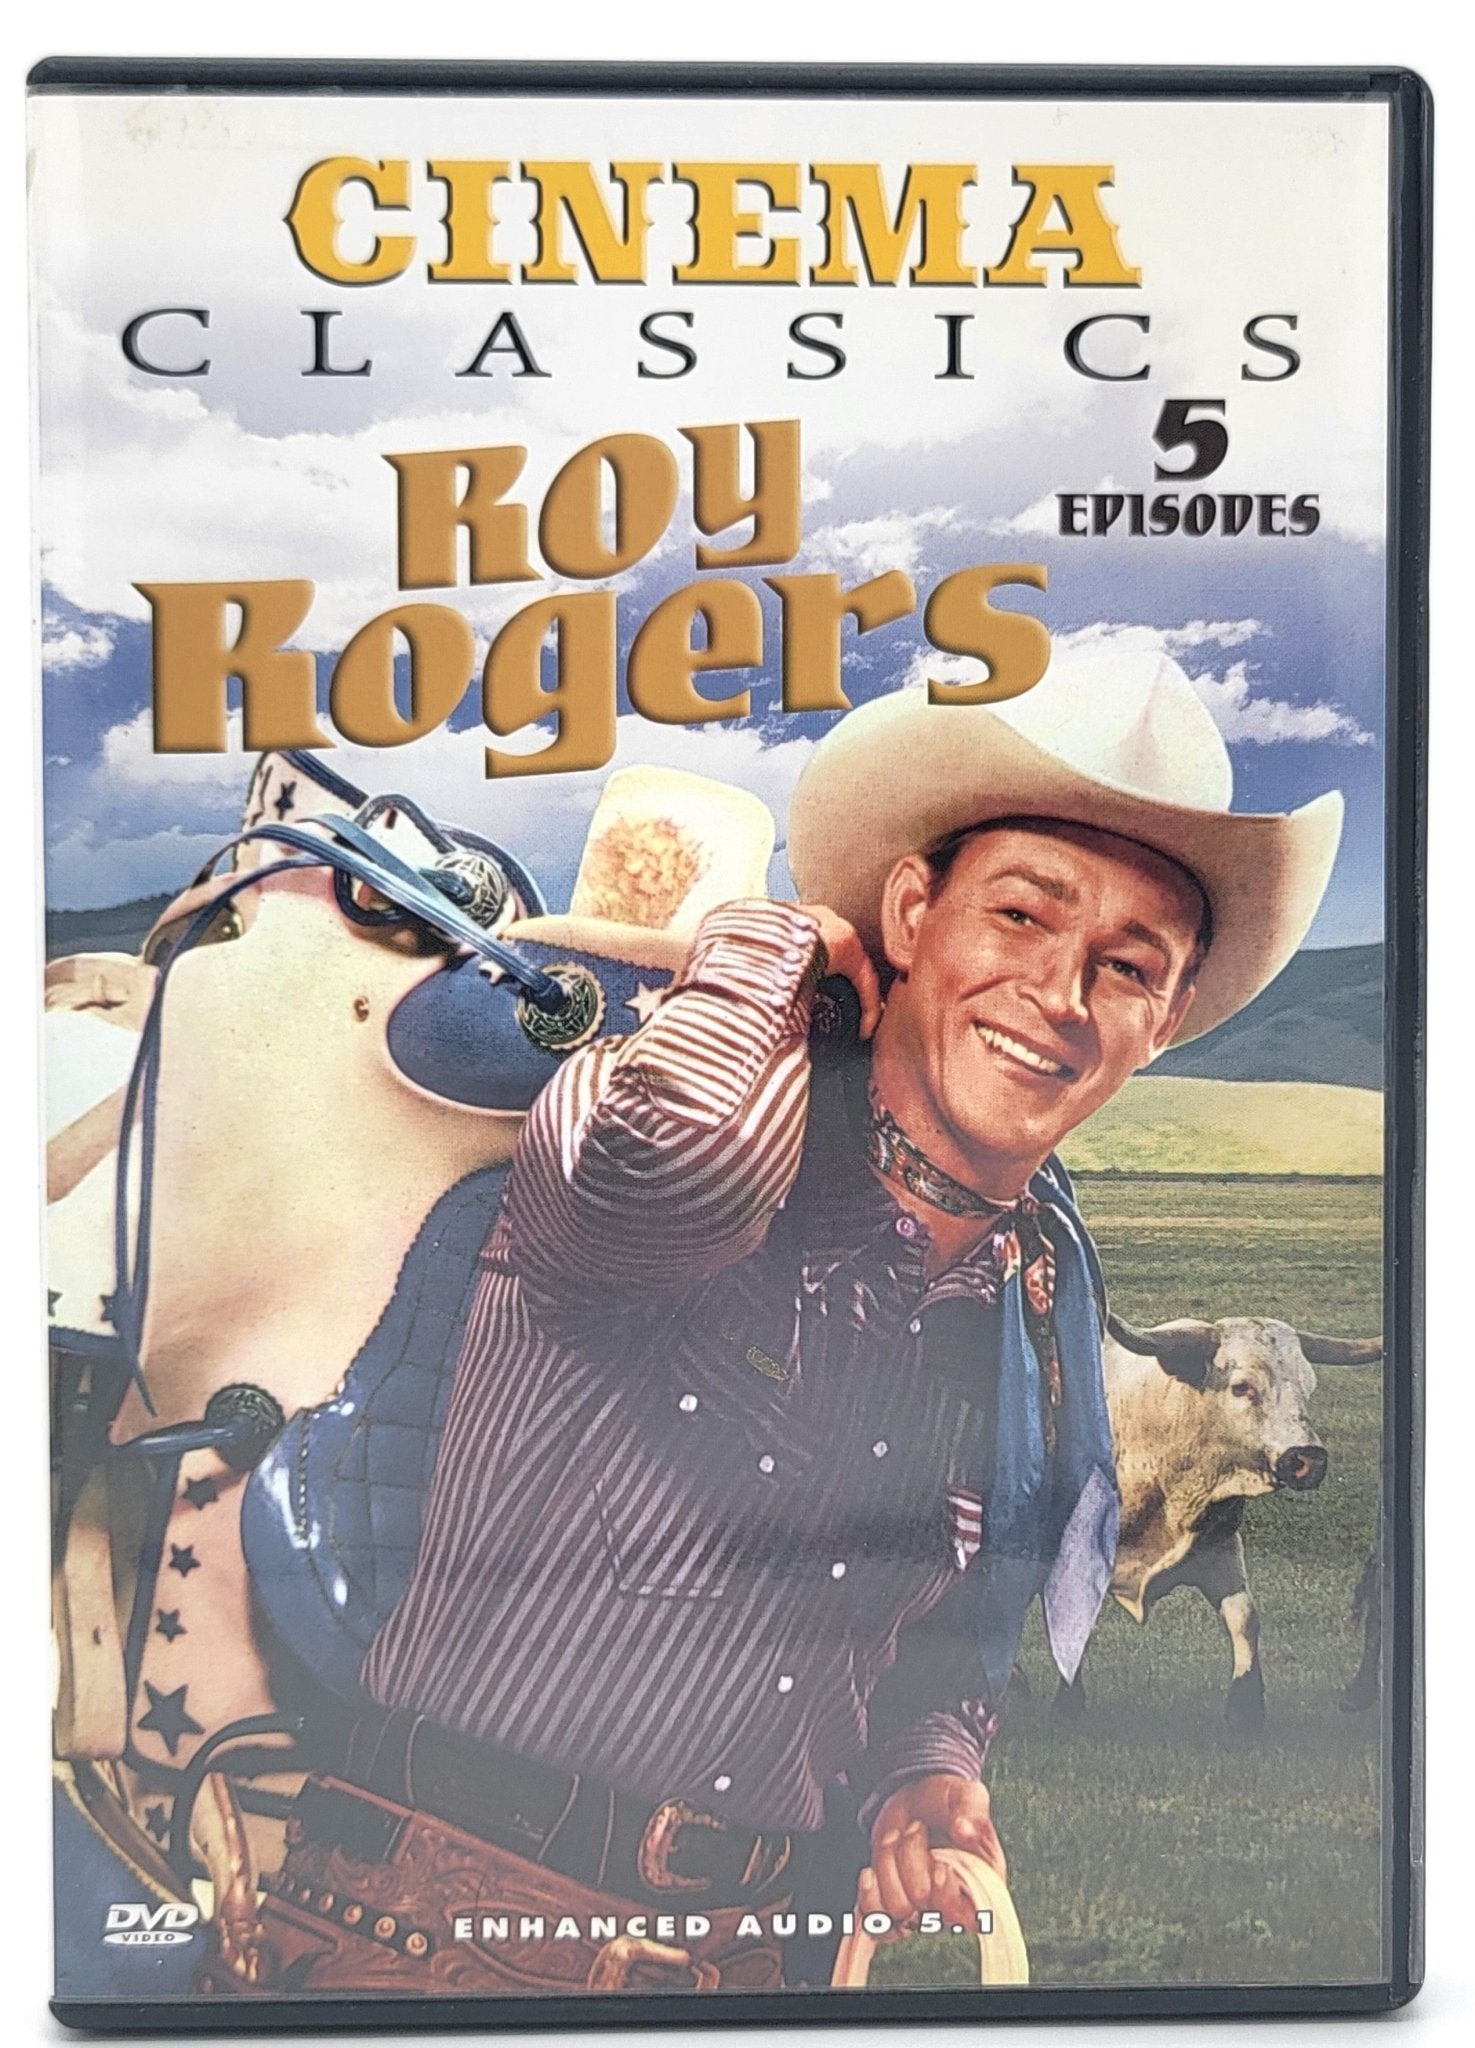 Dart Distributing - Cinema Classics Roy Rogers - 5 Episodes | DVD | Enhanced Audio 5.1 - DVD - Steady Bunny Shop